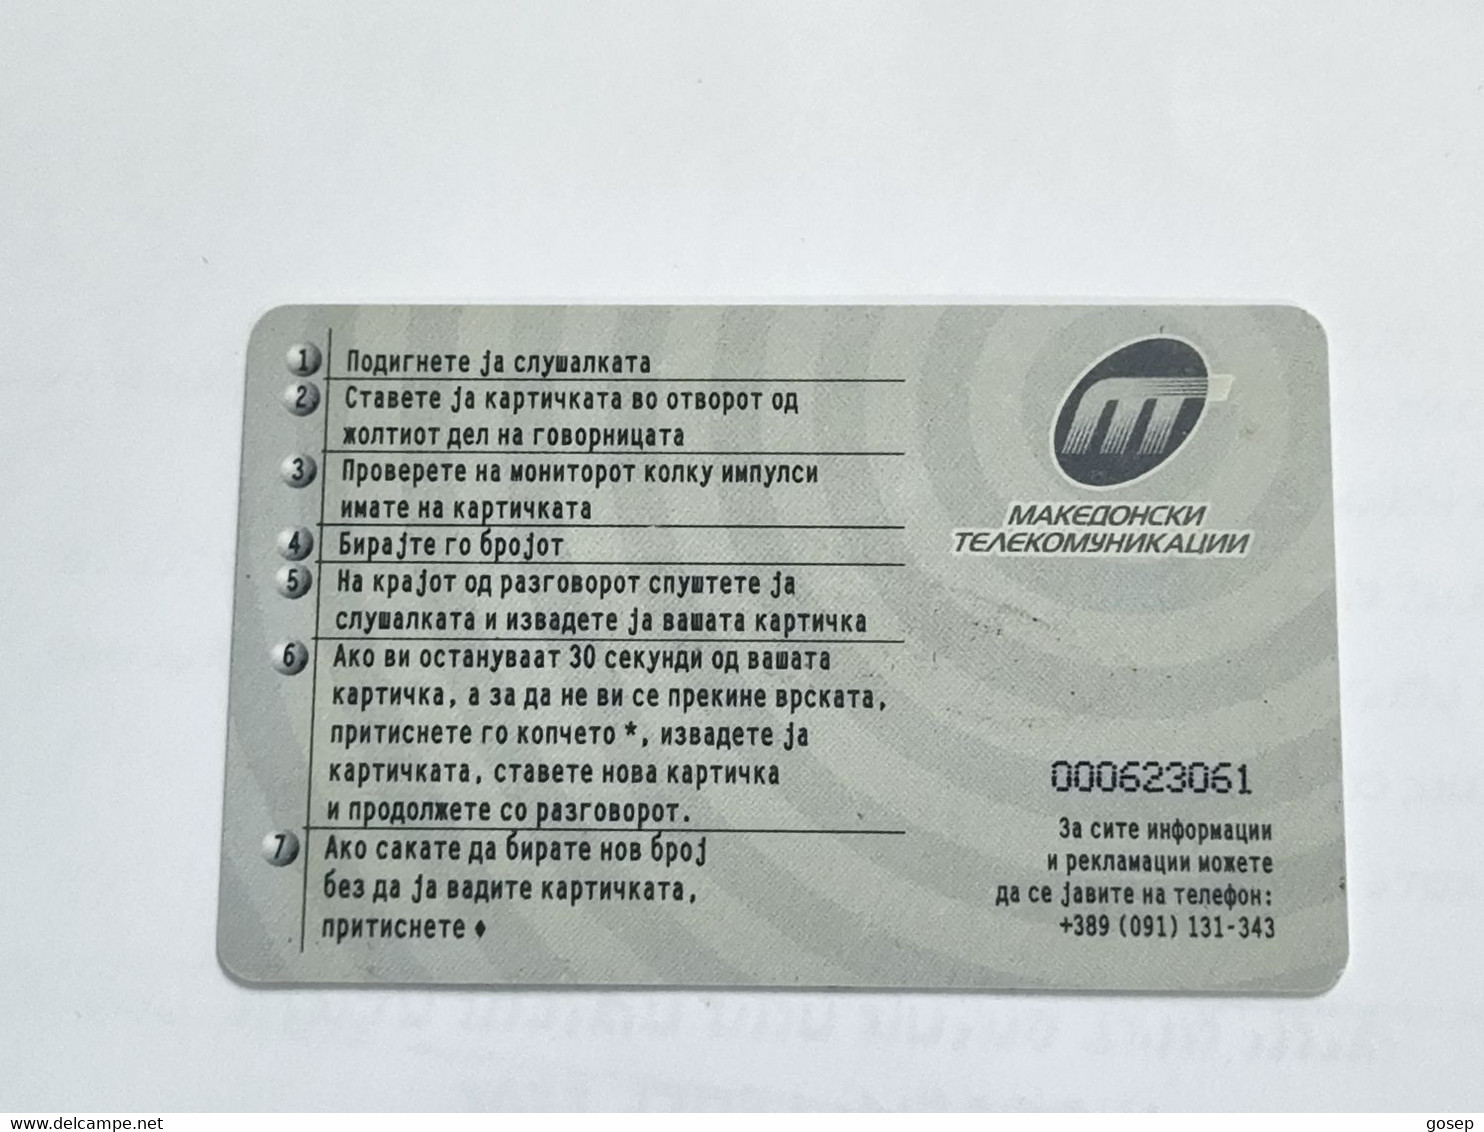 Macedonia-(MK-MAT-0008A)-Modern Technolog-(7)-(9/98)-(200units)-(000623061)-tirage-2.000-used Card+1card Prepiad Free - Macedonia Del Nord